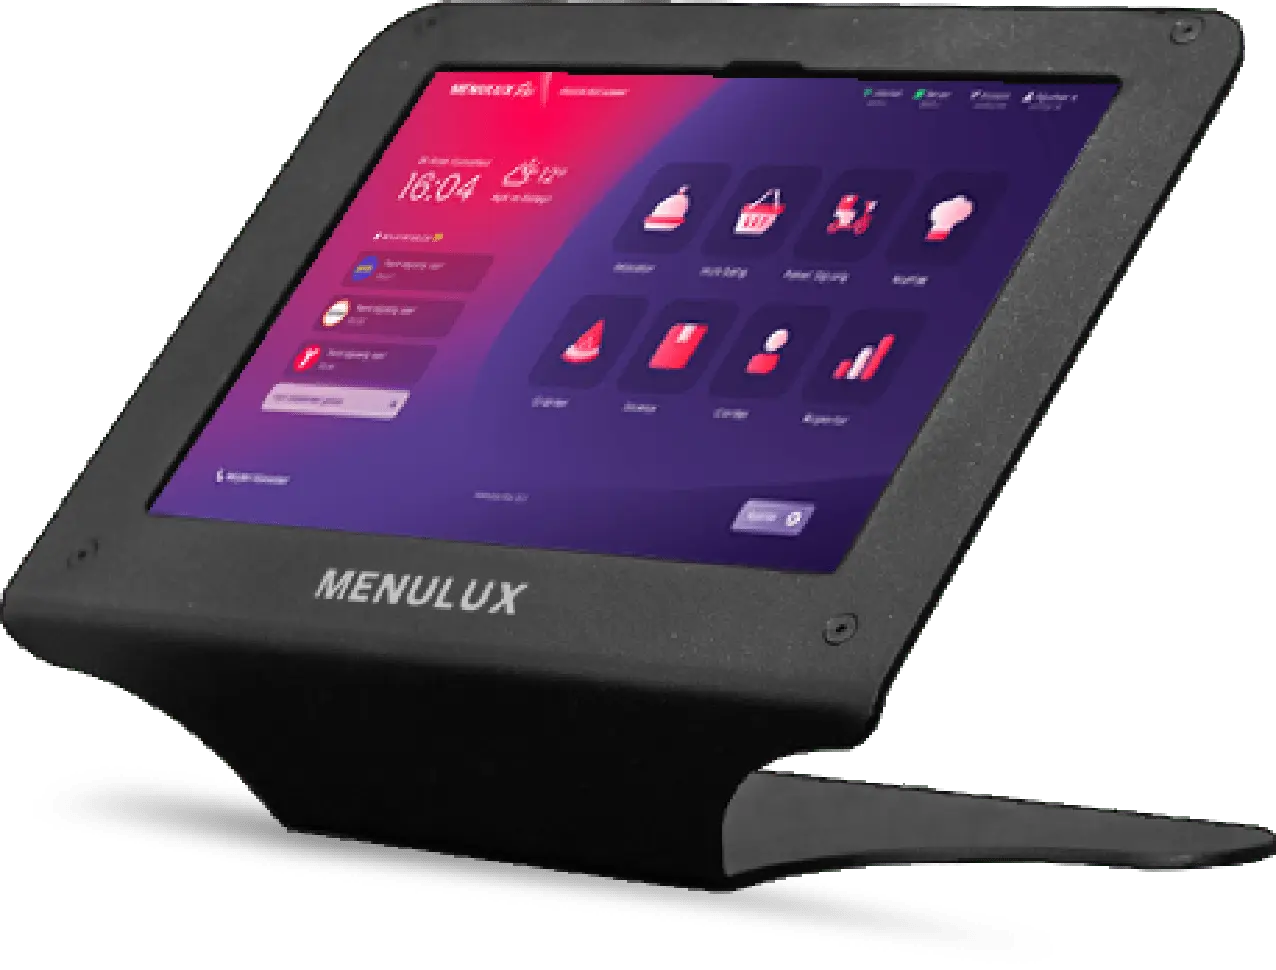 Menulux Restoran Tablet Pos Cihazları